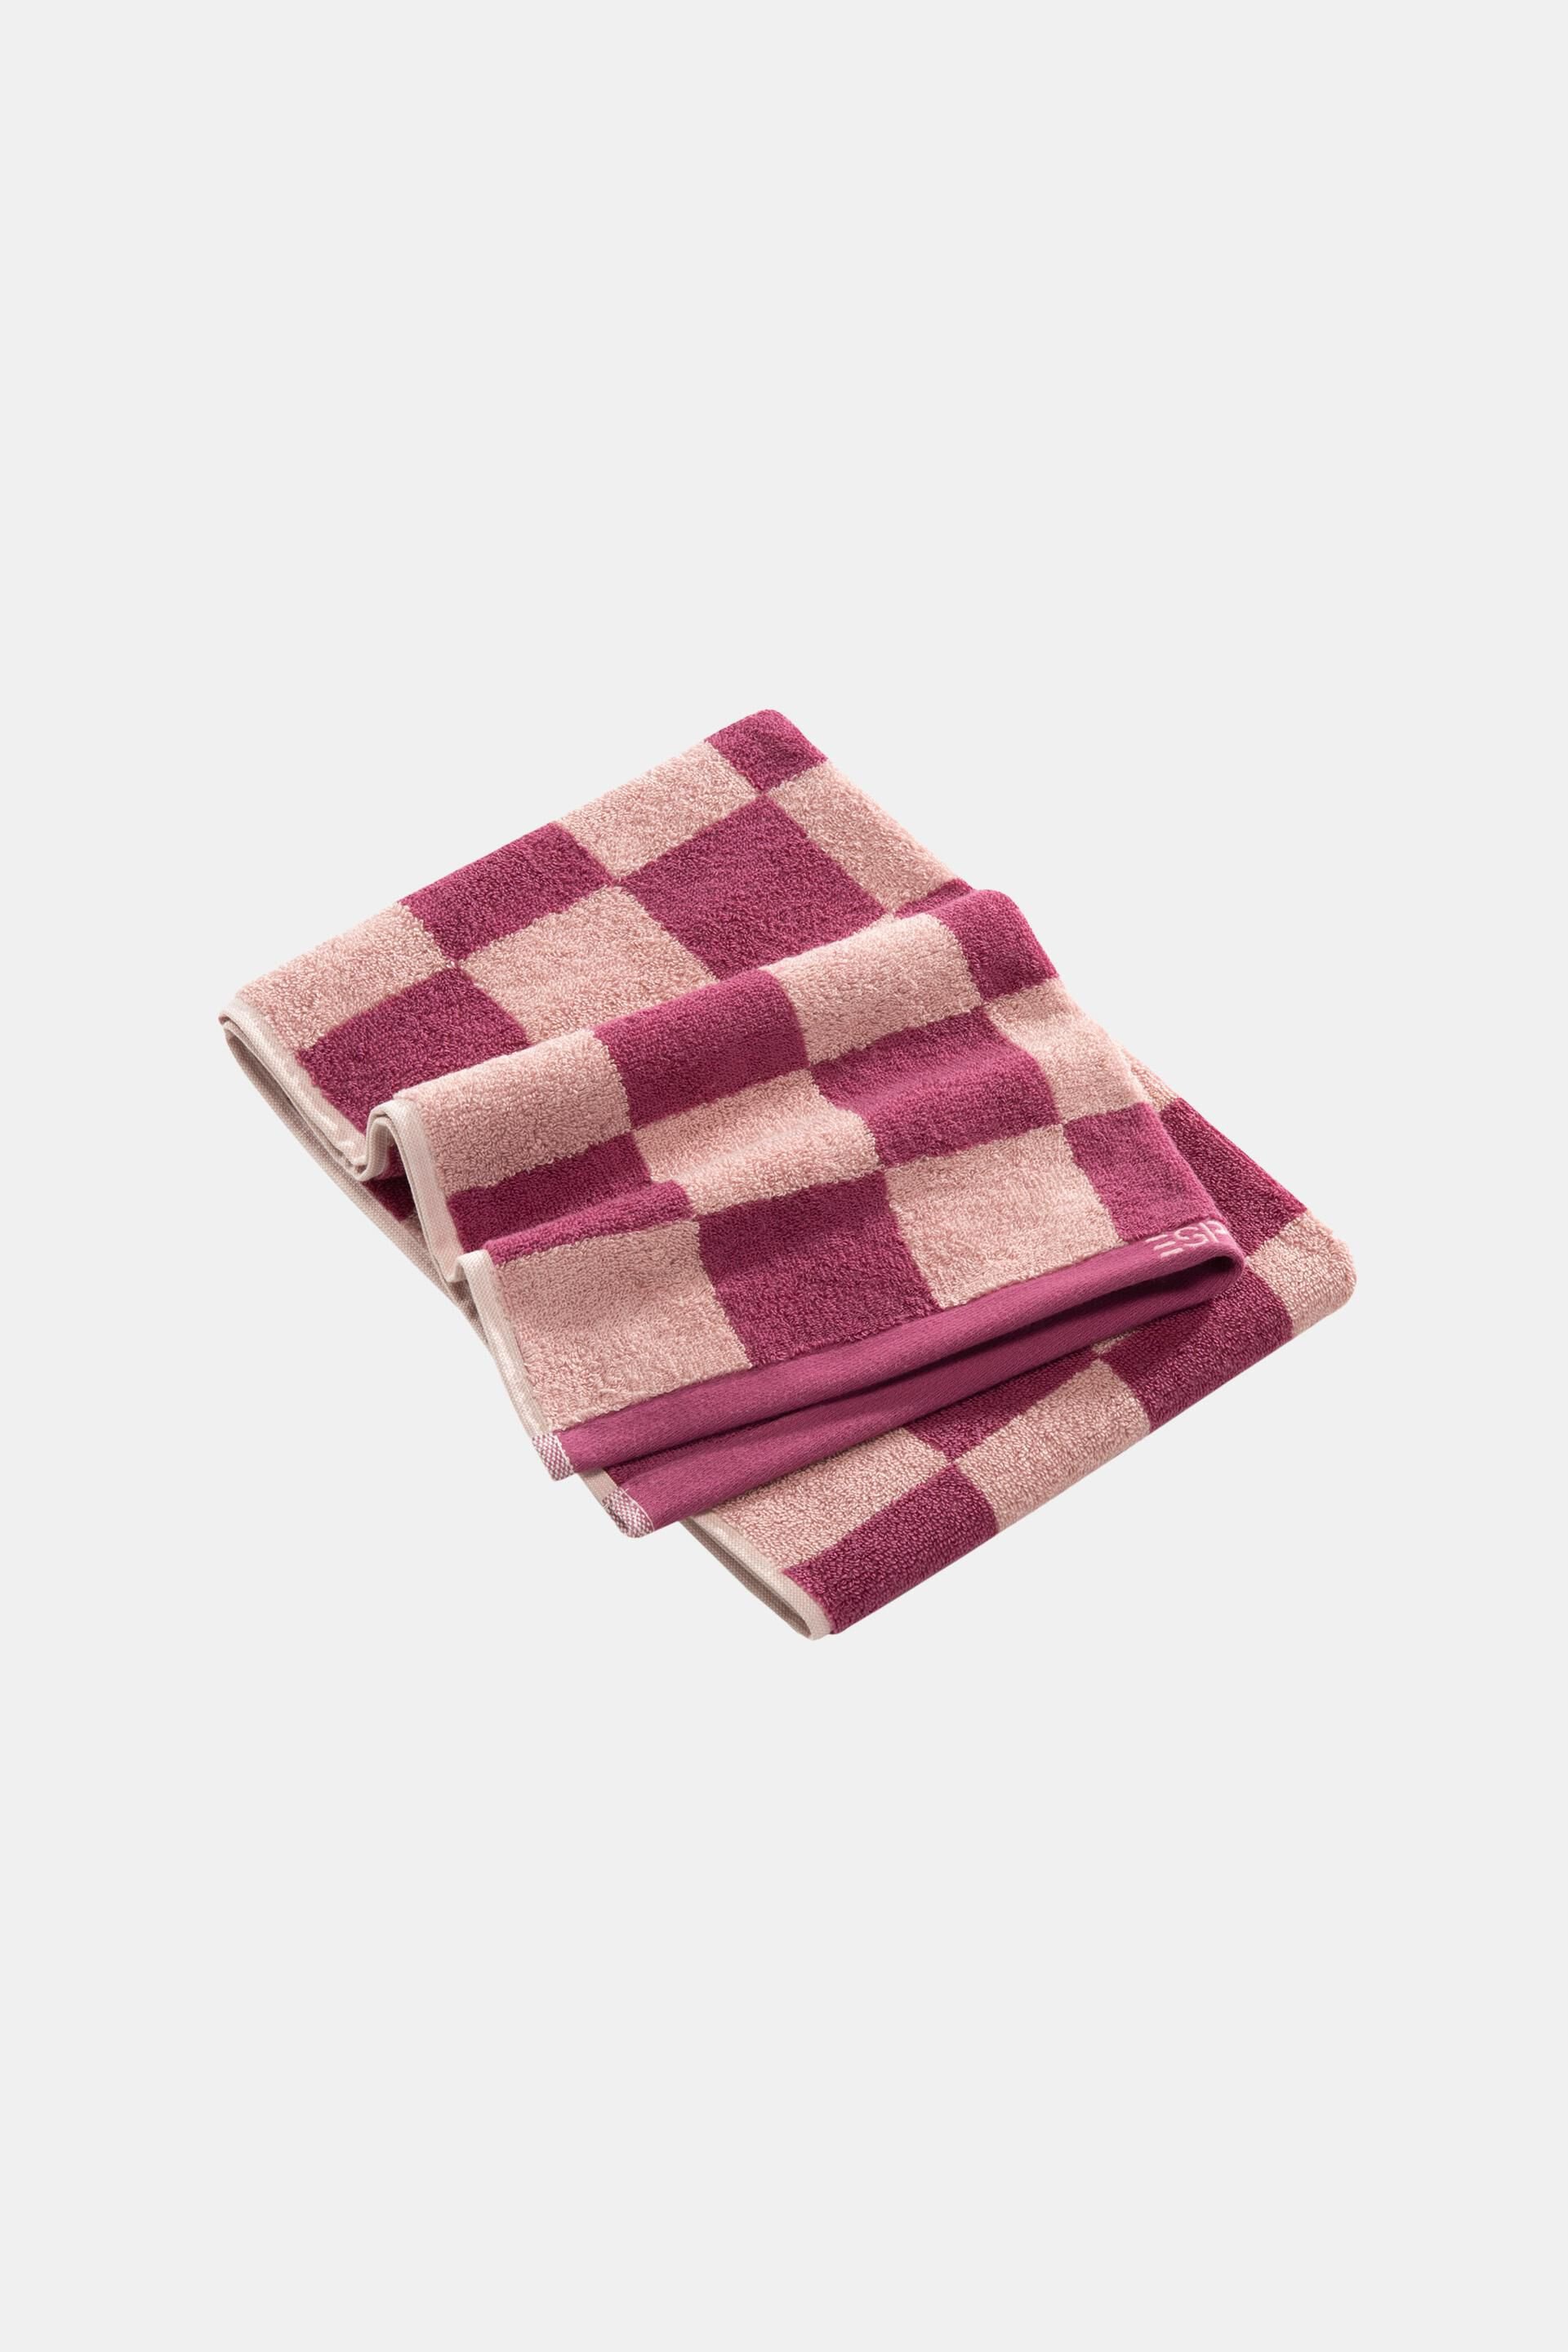 Esprit T Shirt Chequered pattern towel, 100% cotton